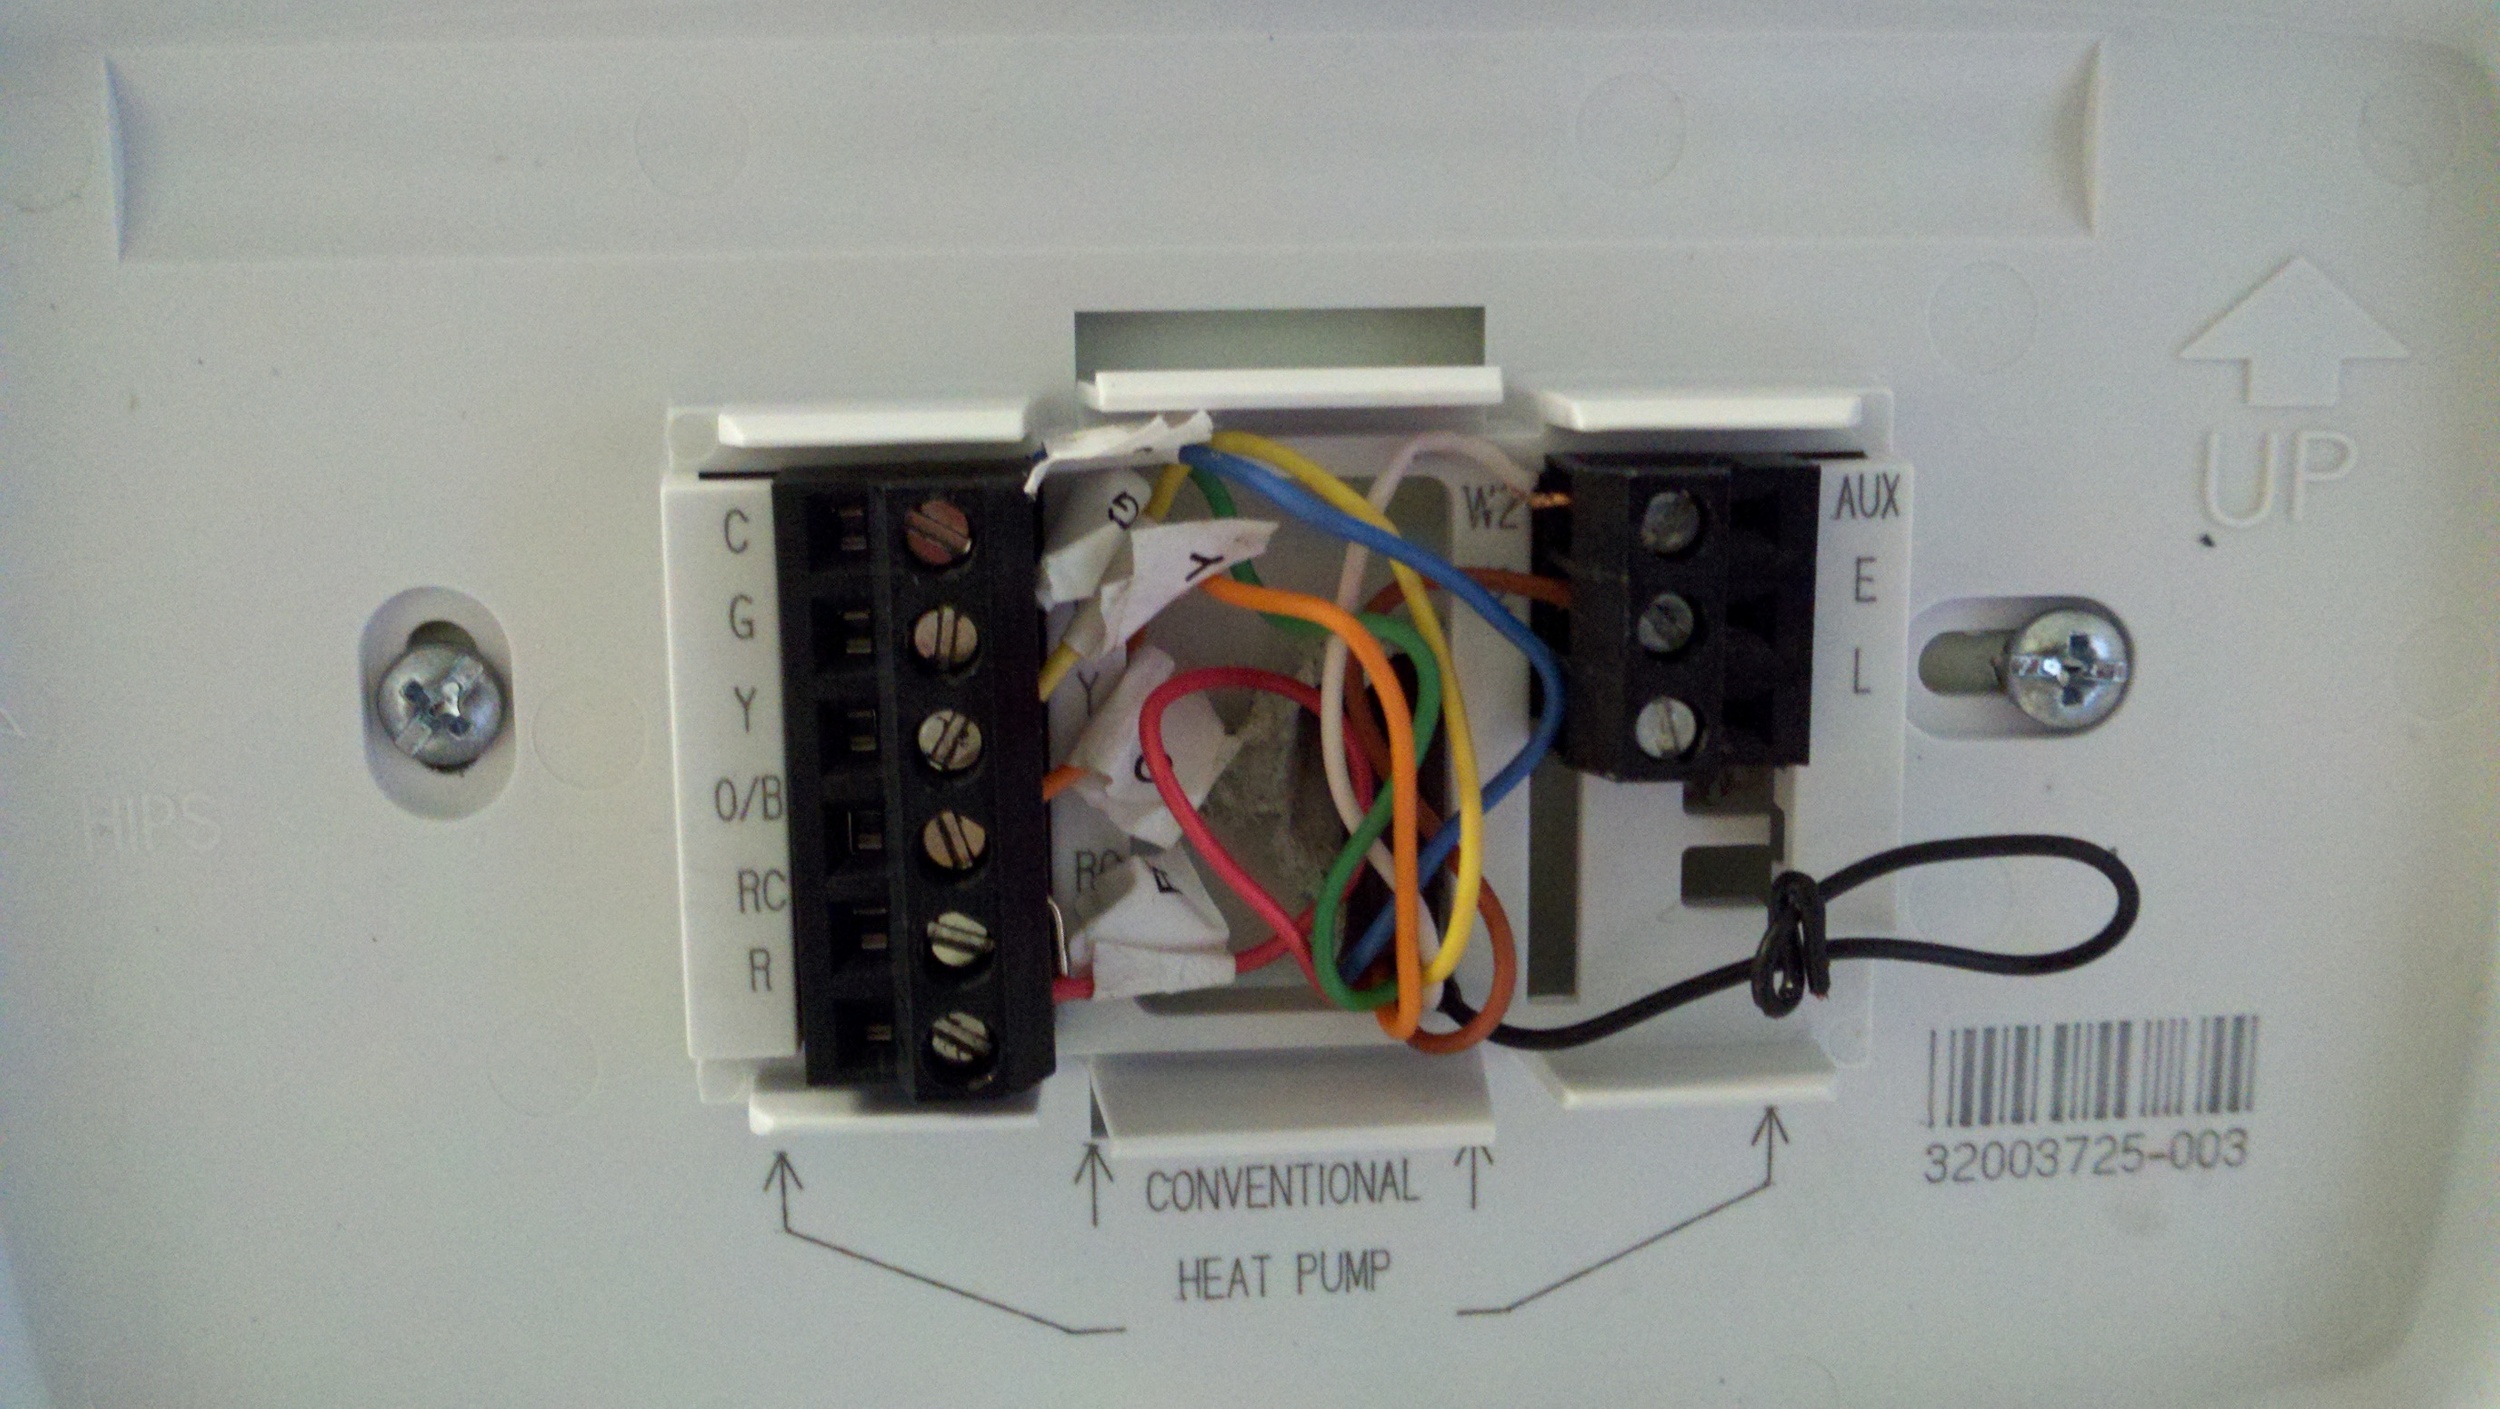 Wiring Diagram Of Heat Pump Honeywell Thermostat from diagramweb.net